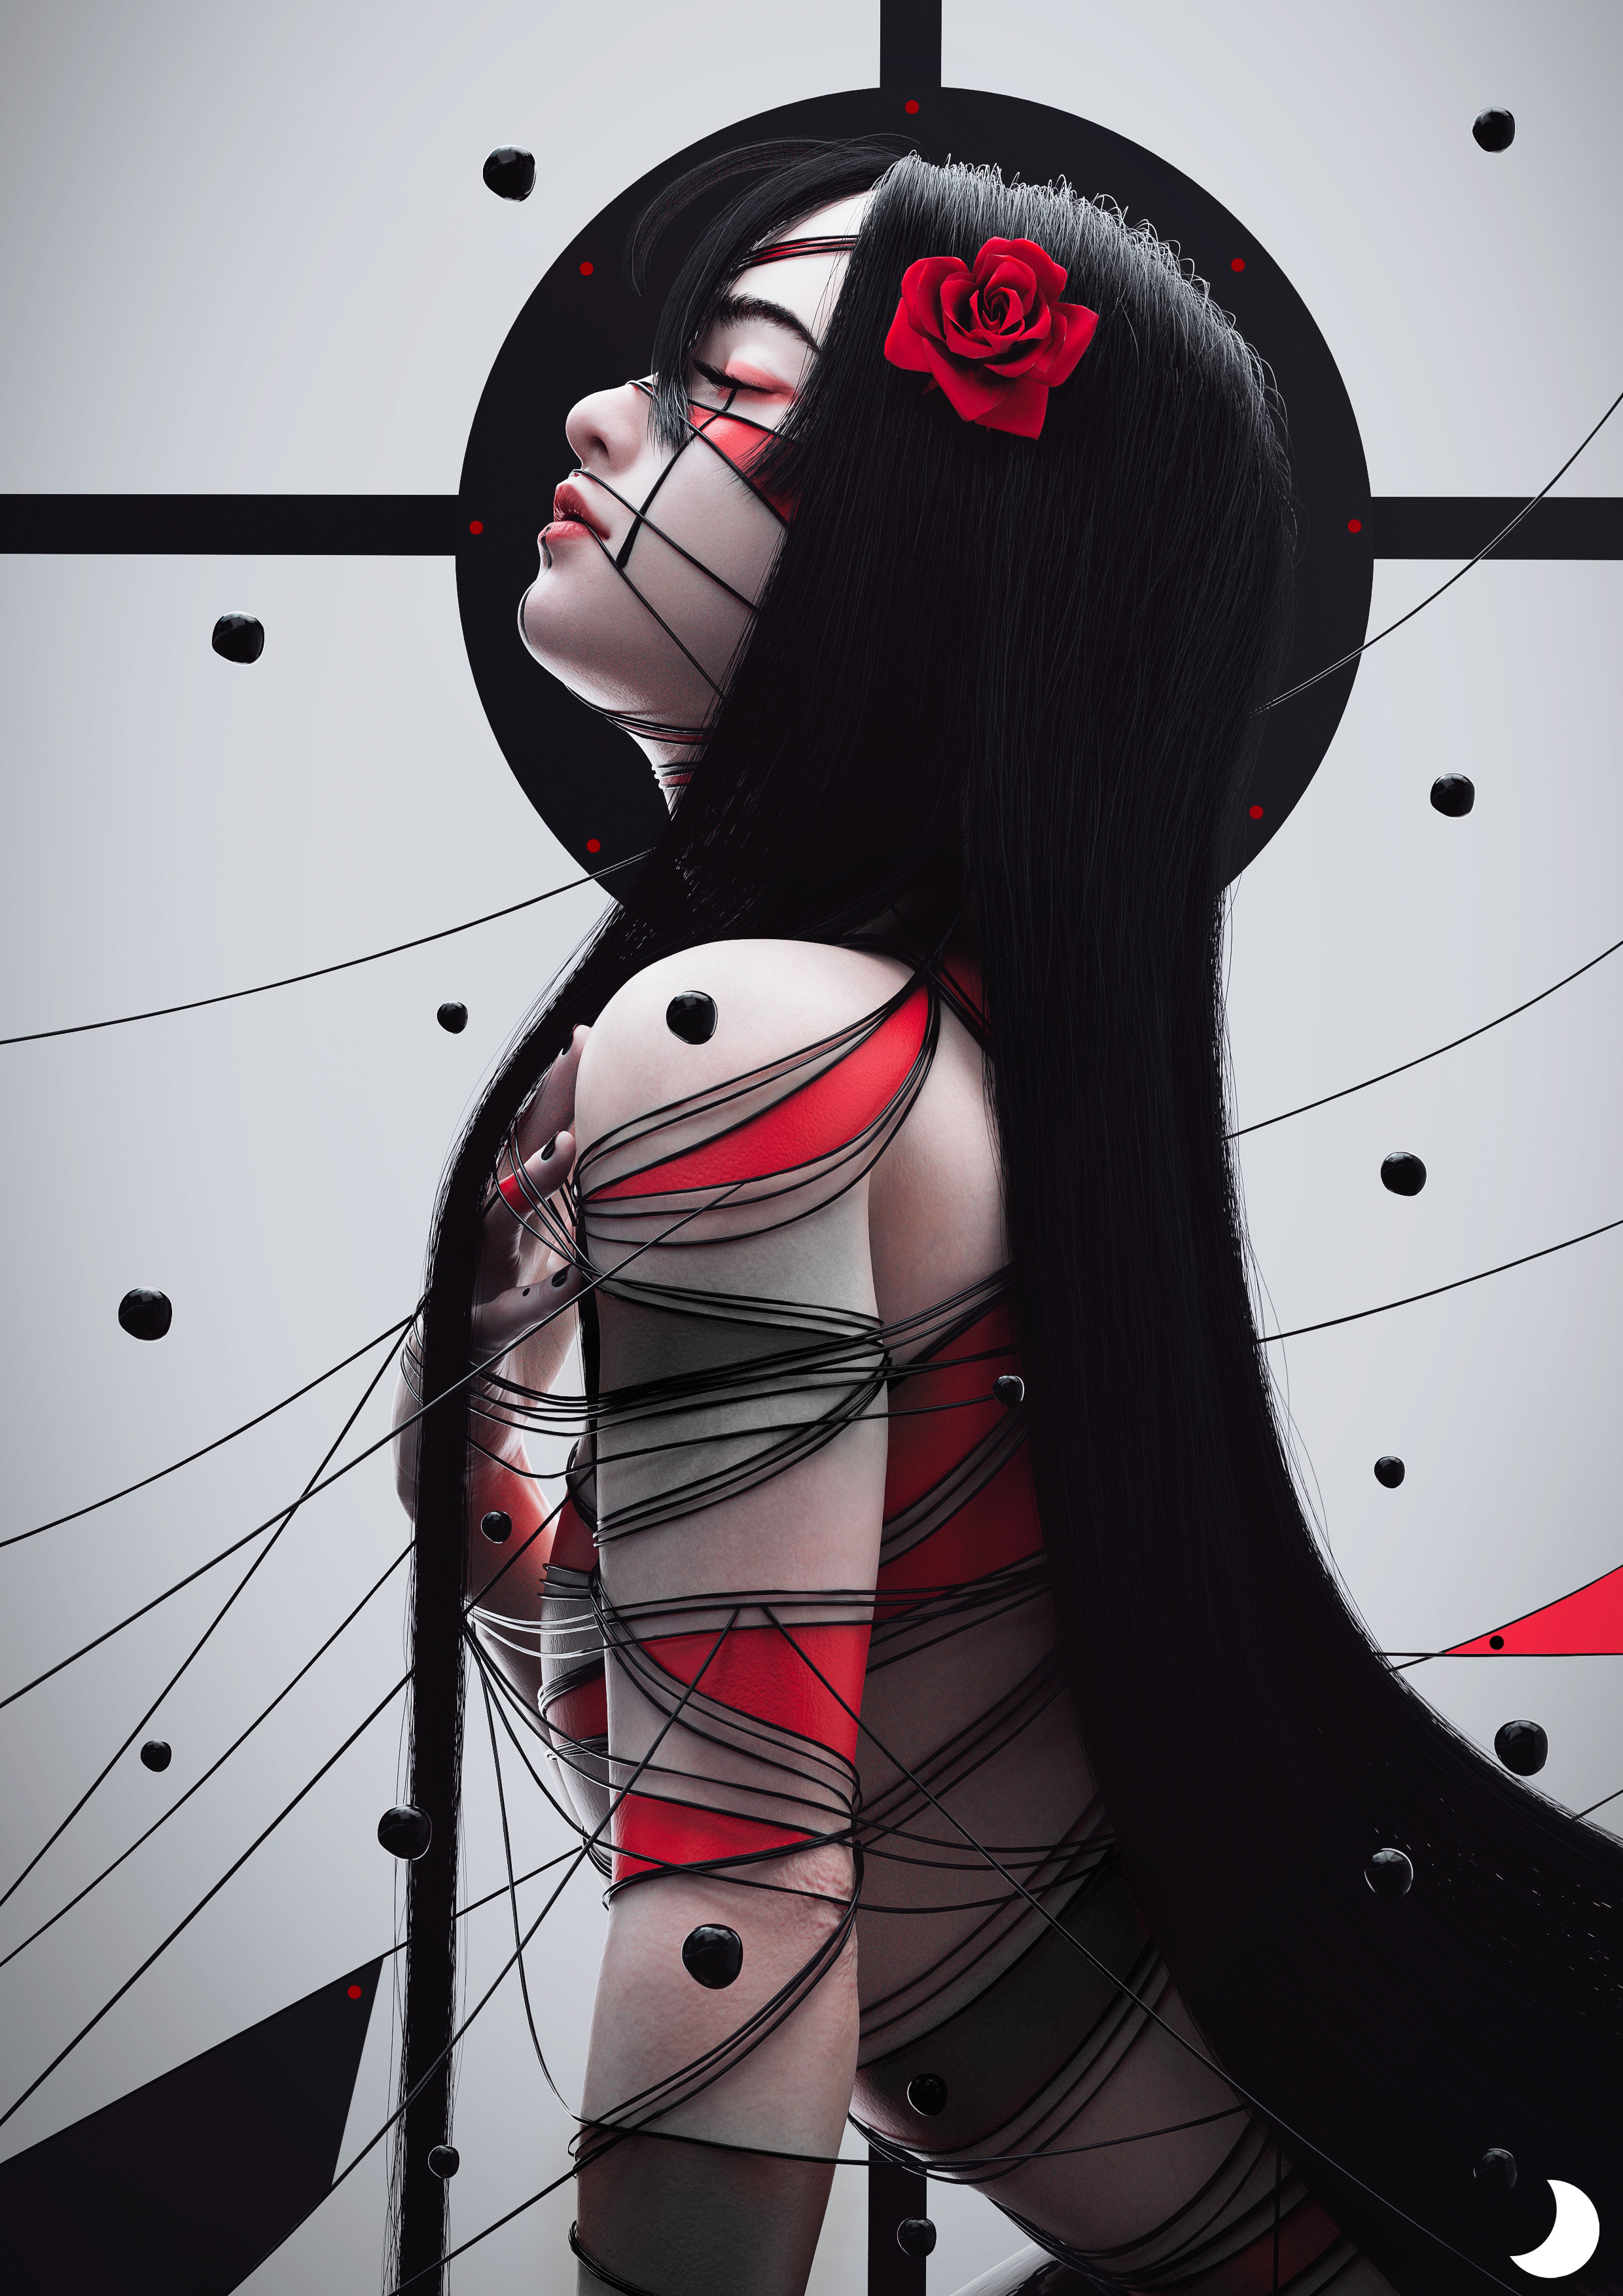 General 2480x3508 artwork digital art Asian women Dylan Kowalski face profile hair in face black hair long hair flower in hair